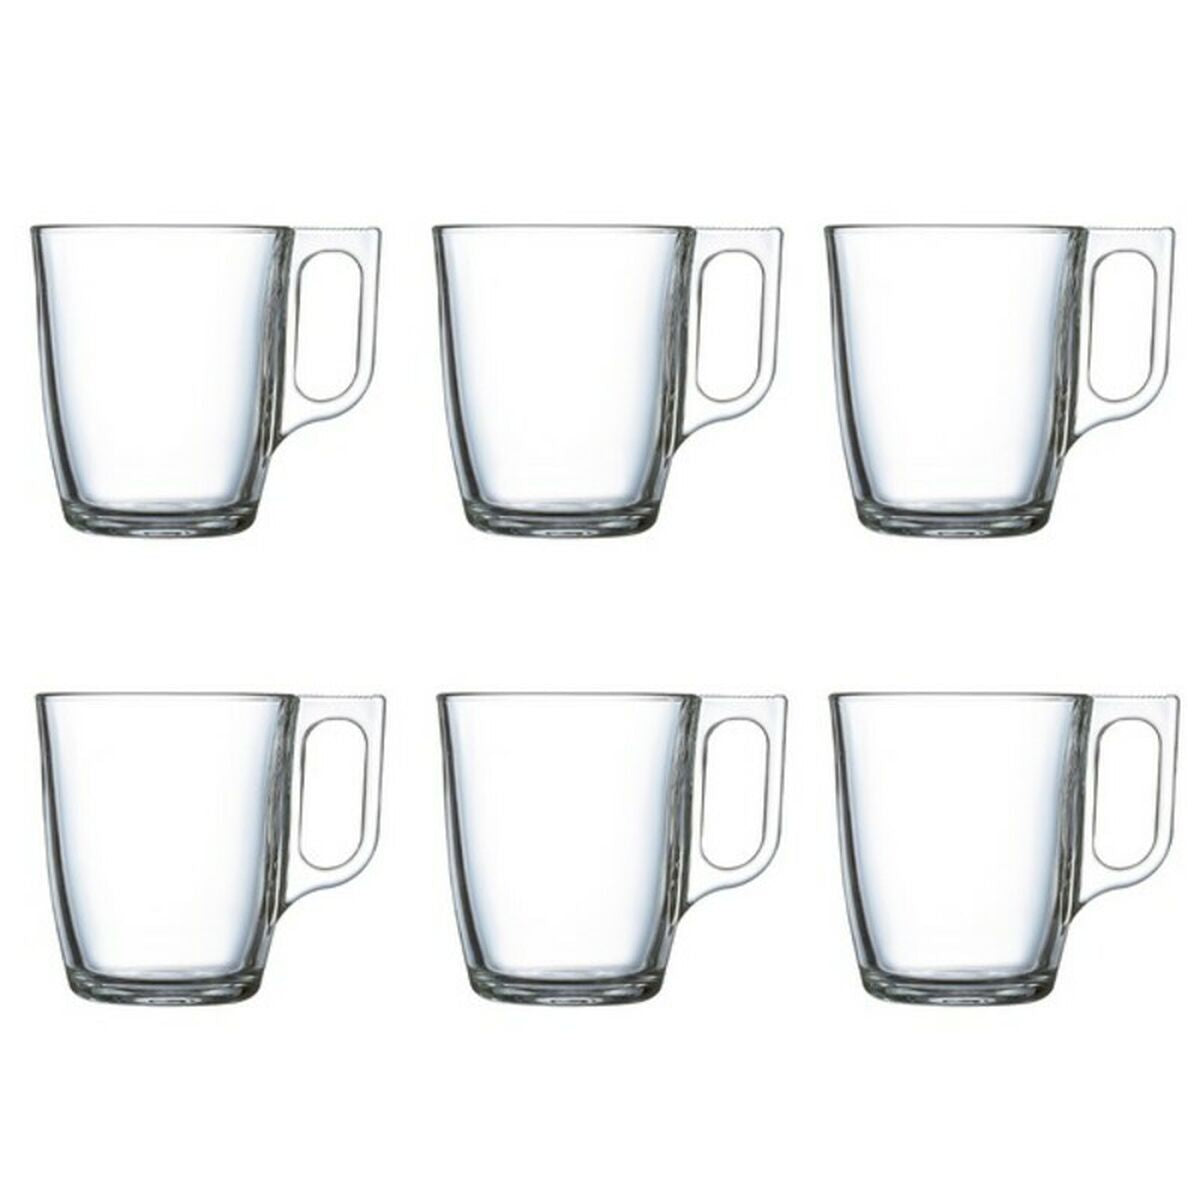 Set of coffee mugs transparent Luminarc 250ml - 6 pieces